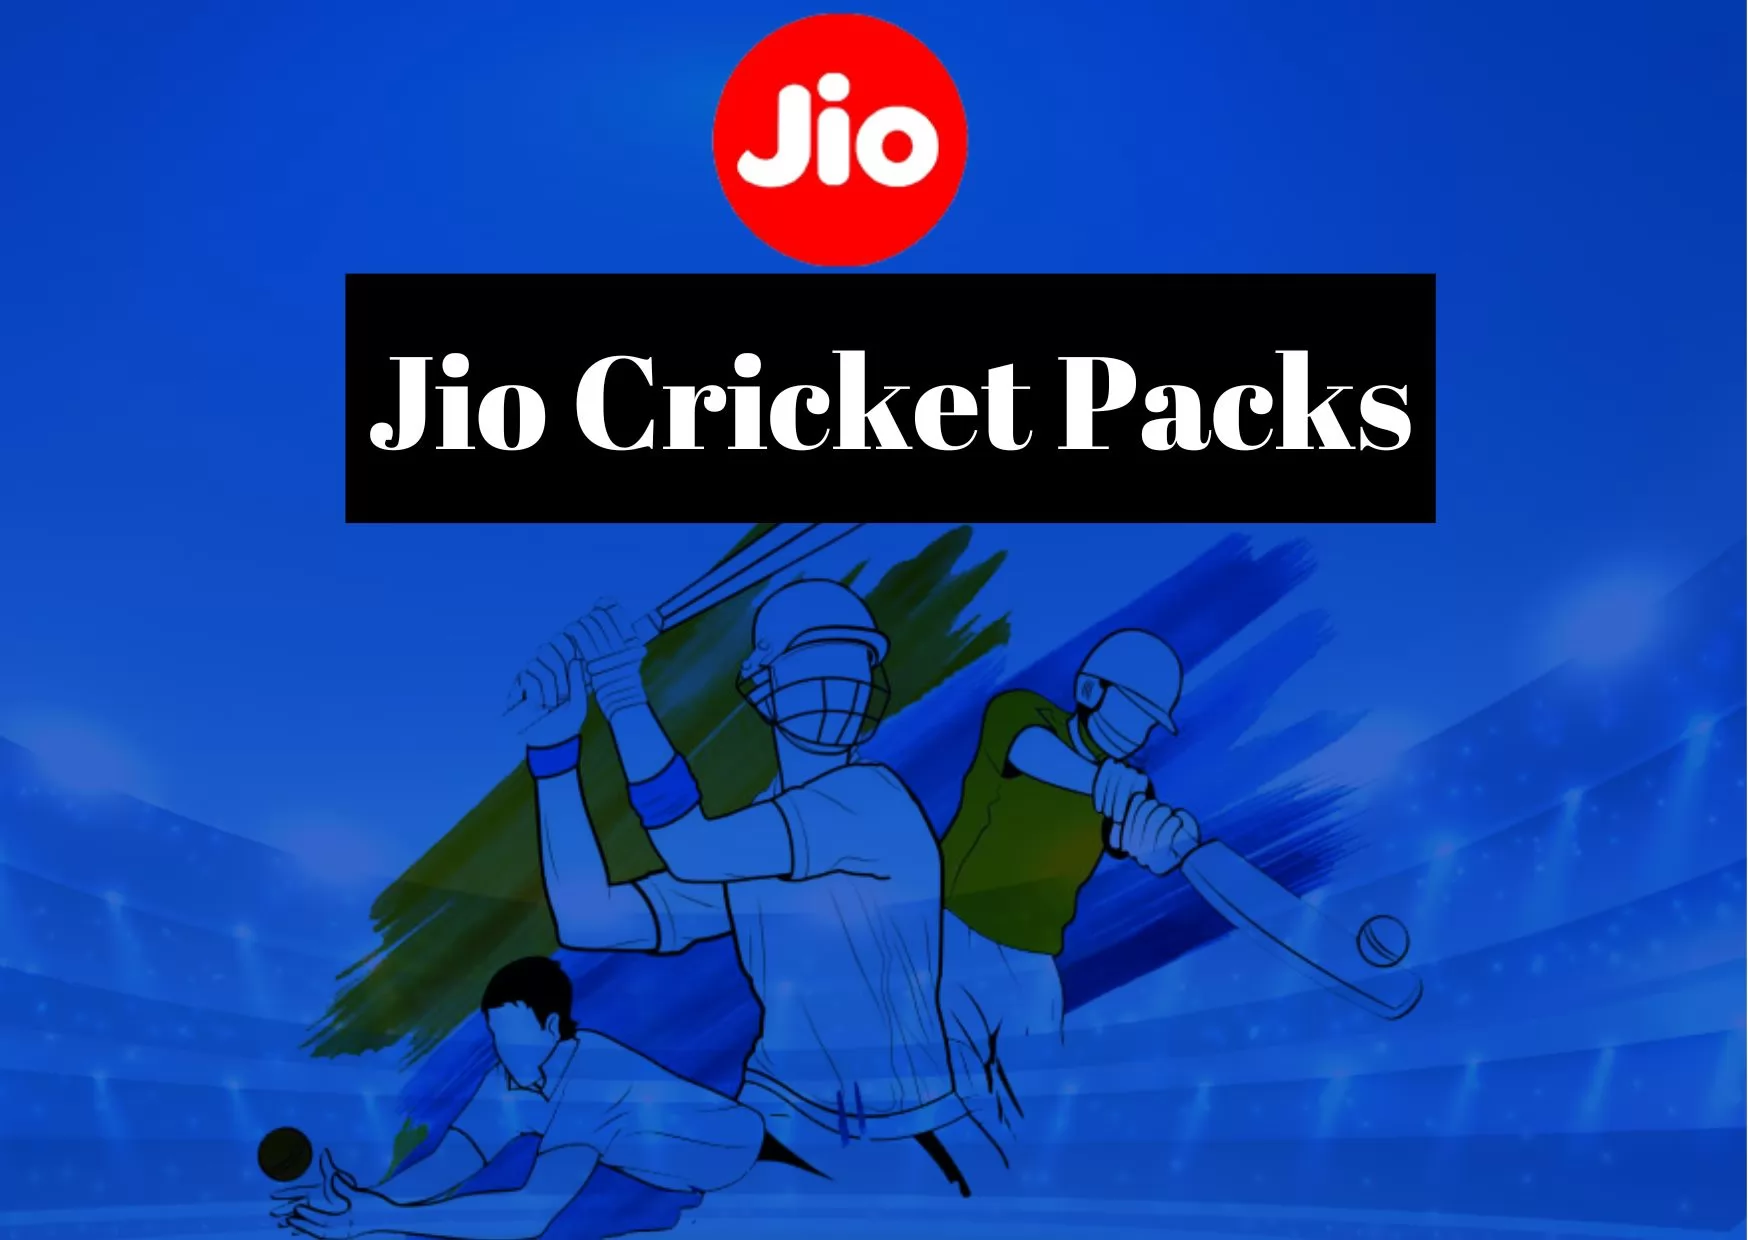 Jio Cricket Packs